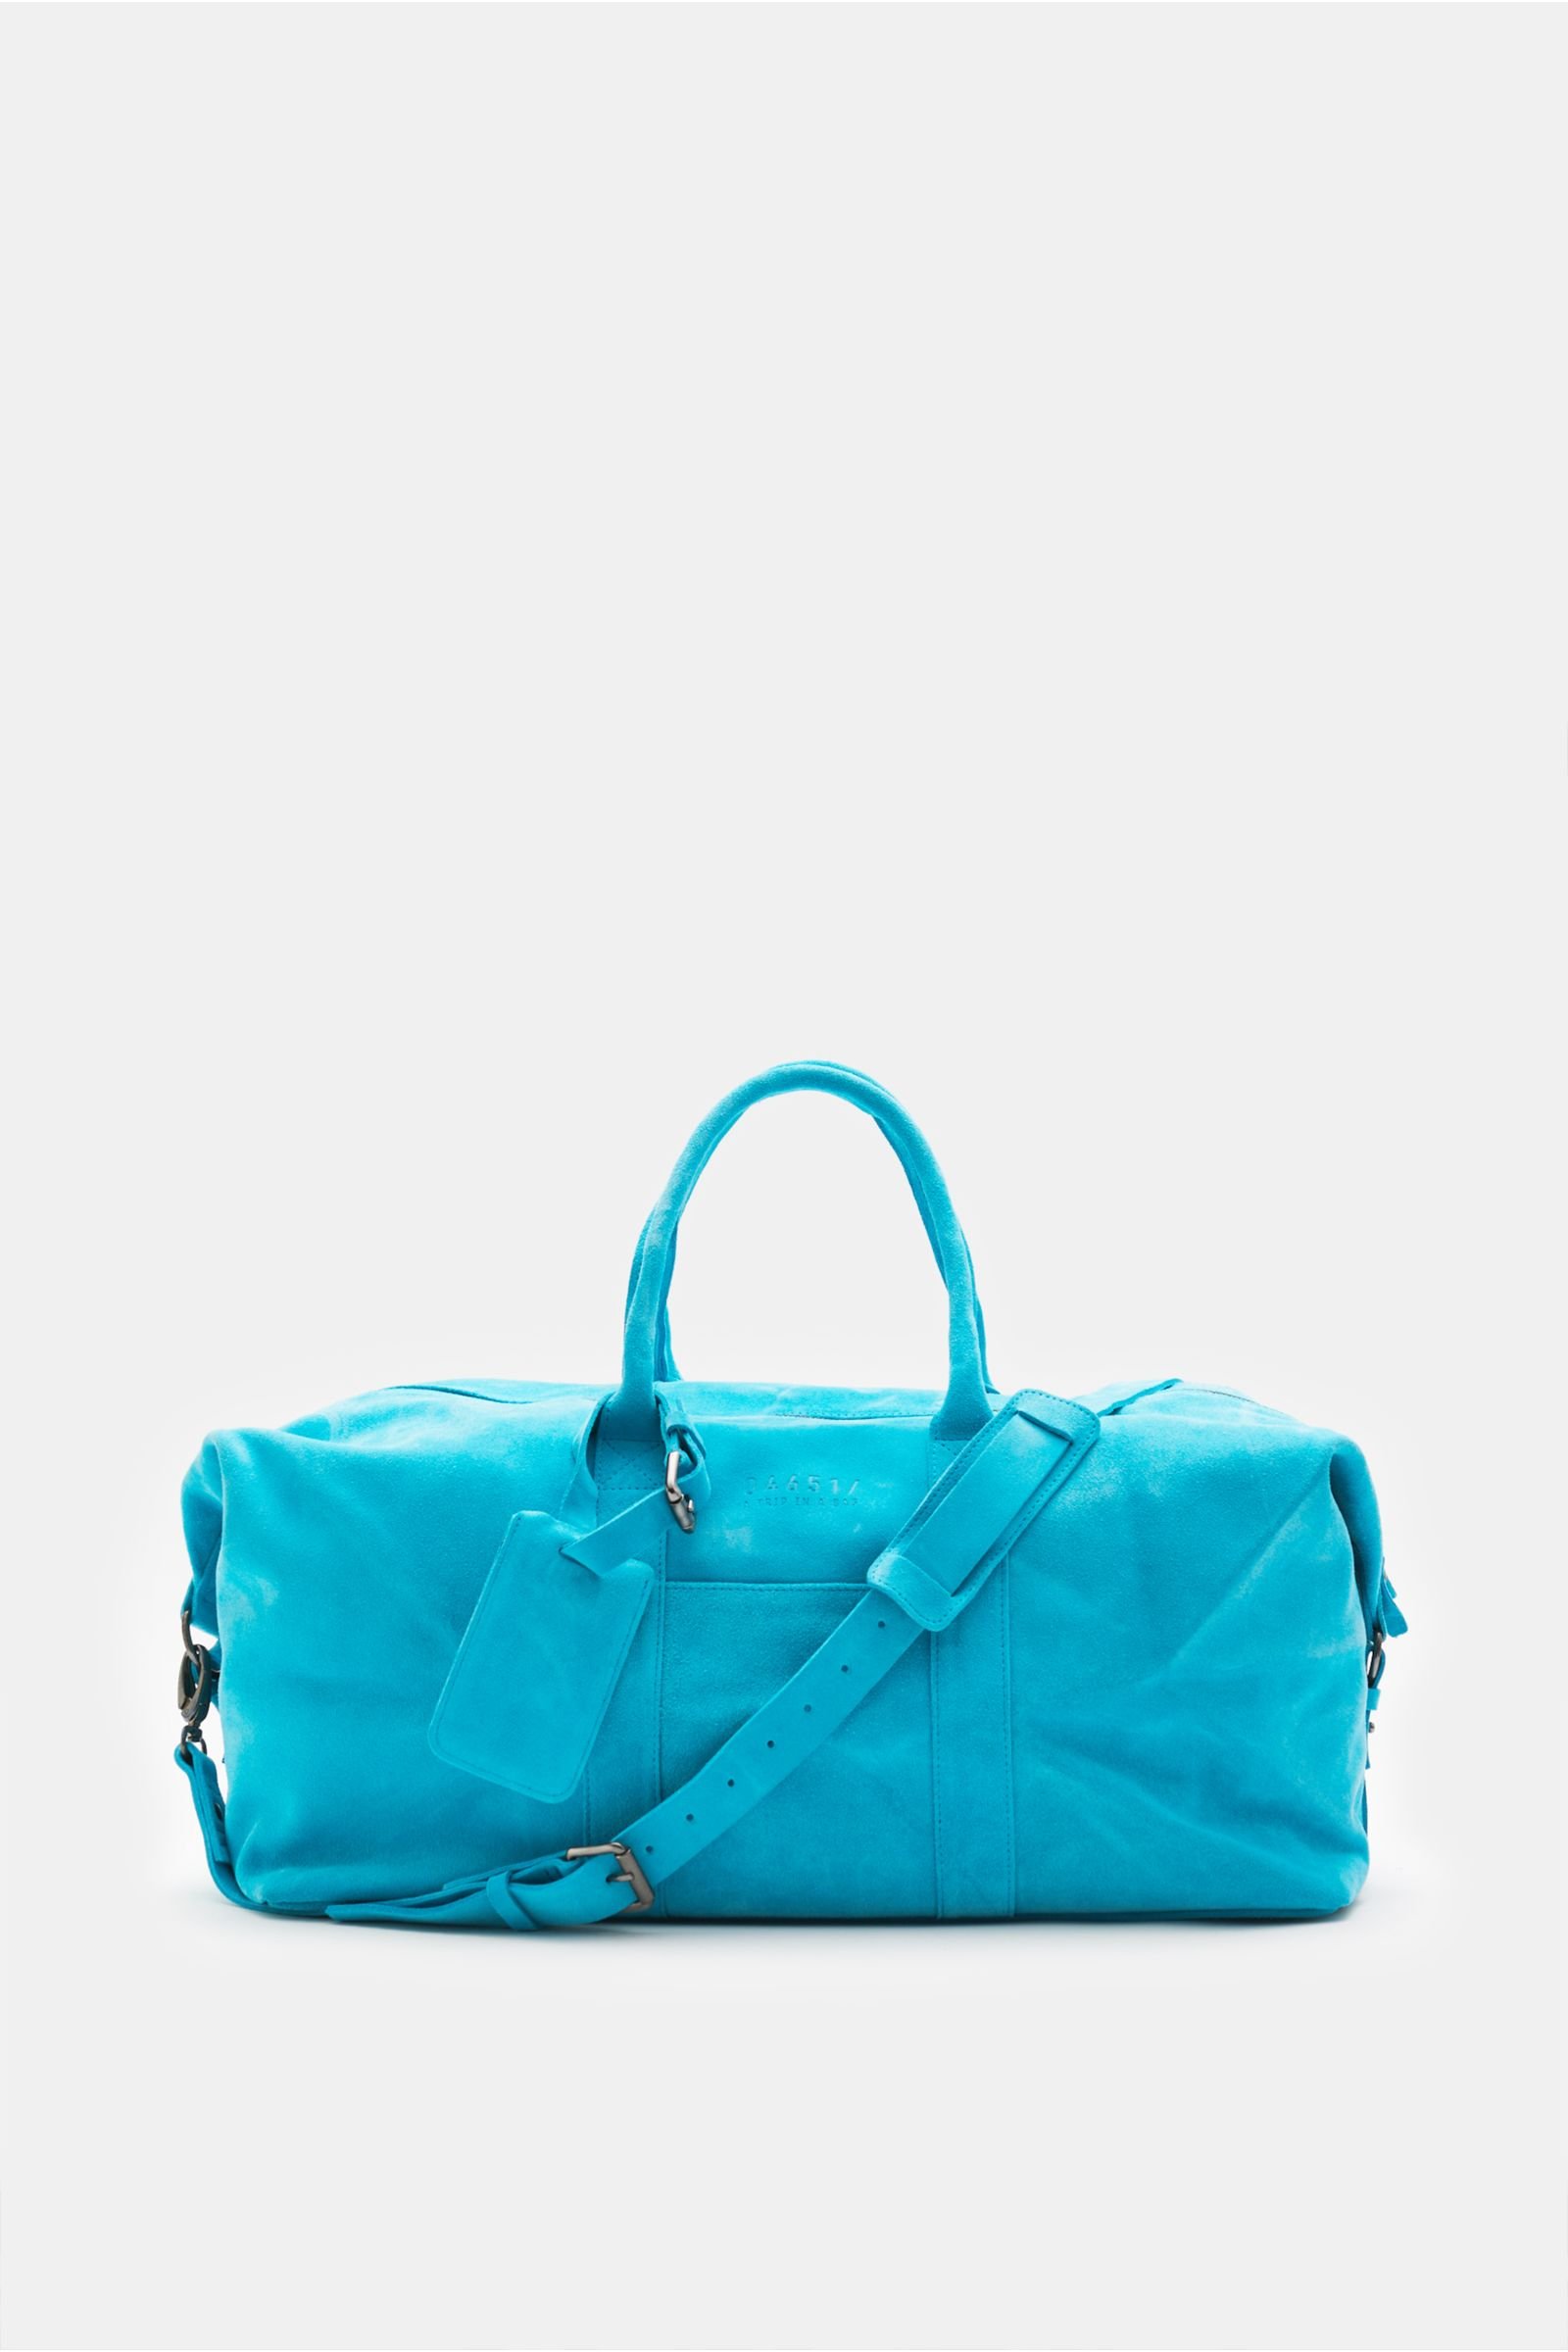 Weekender '3-Day Bag' turquoise